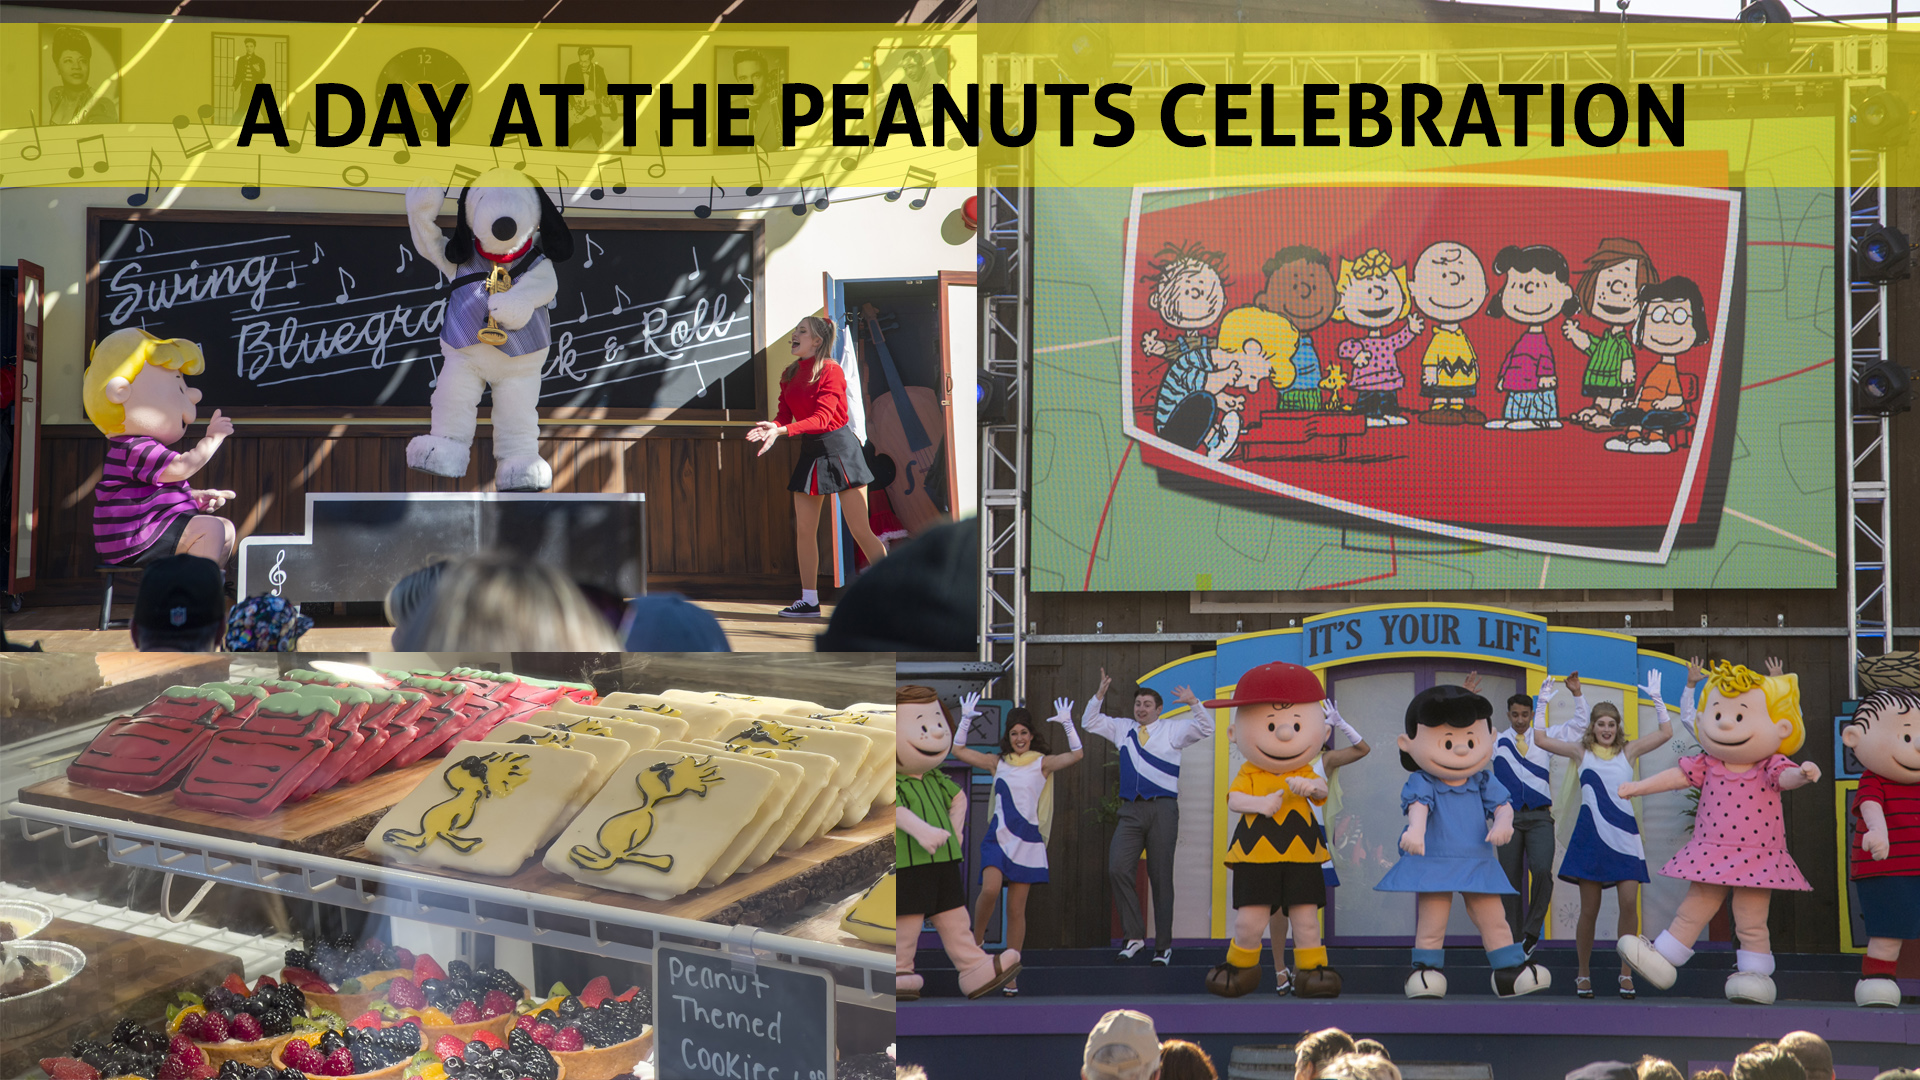 Knott’s Peanuts Celebration Brings the Party Back!